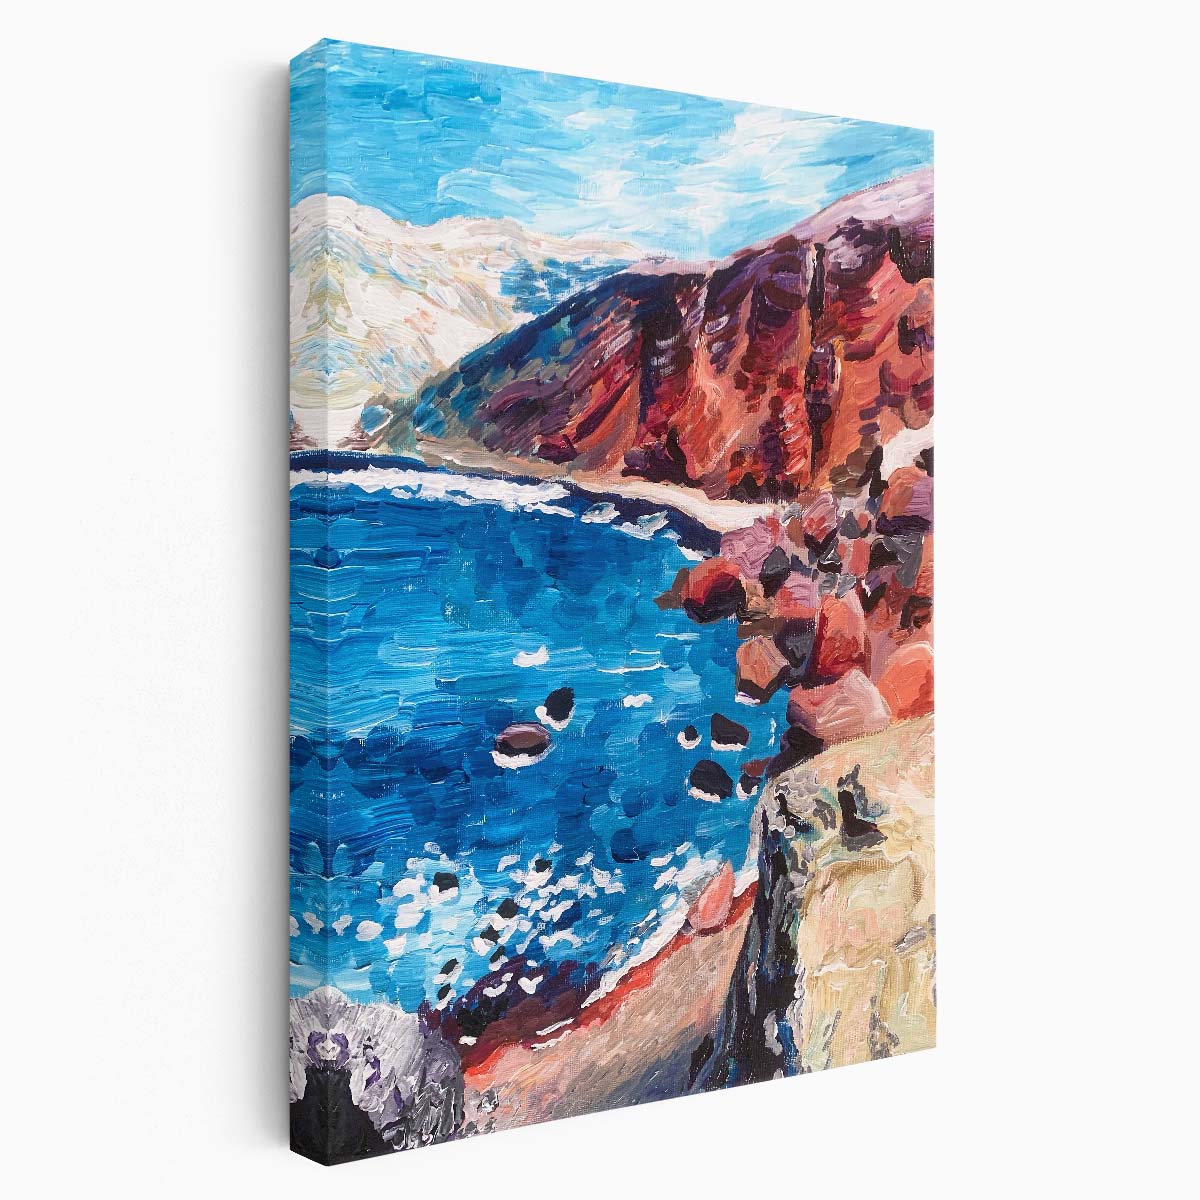 Santorini Red Sand Beach Acrylic Illustration Artwork, Greece Coastal Landscape by Luxuriance Designs, made in USA